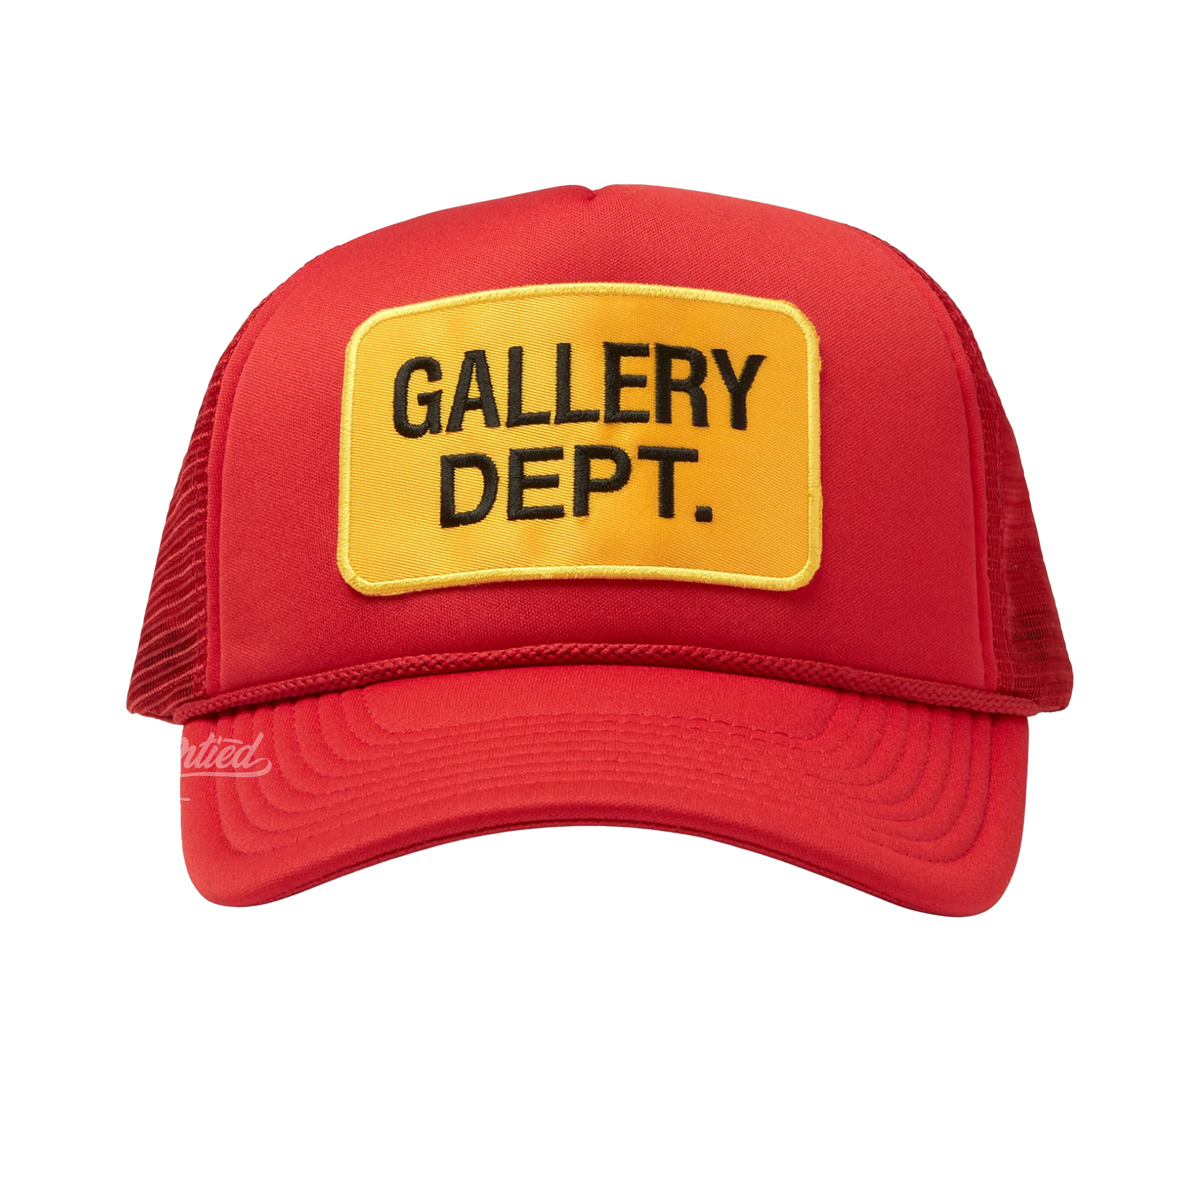 Gallery Dept. Souvenir Trucker Hat 